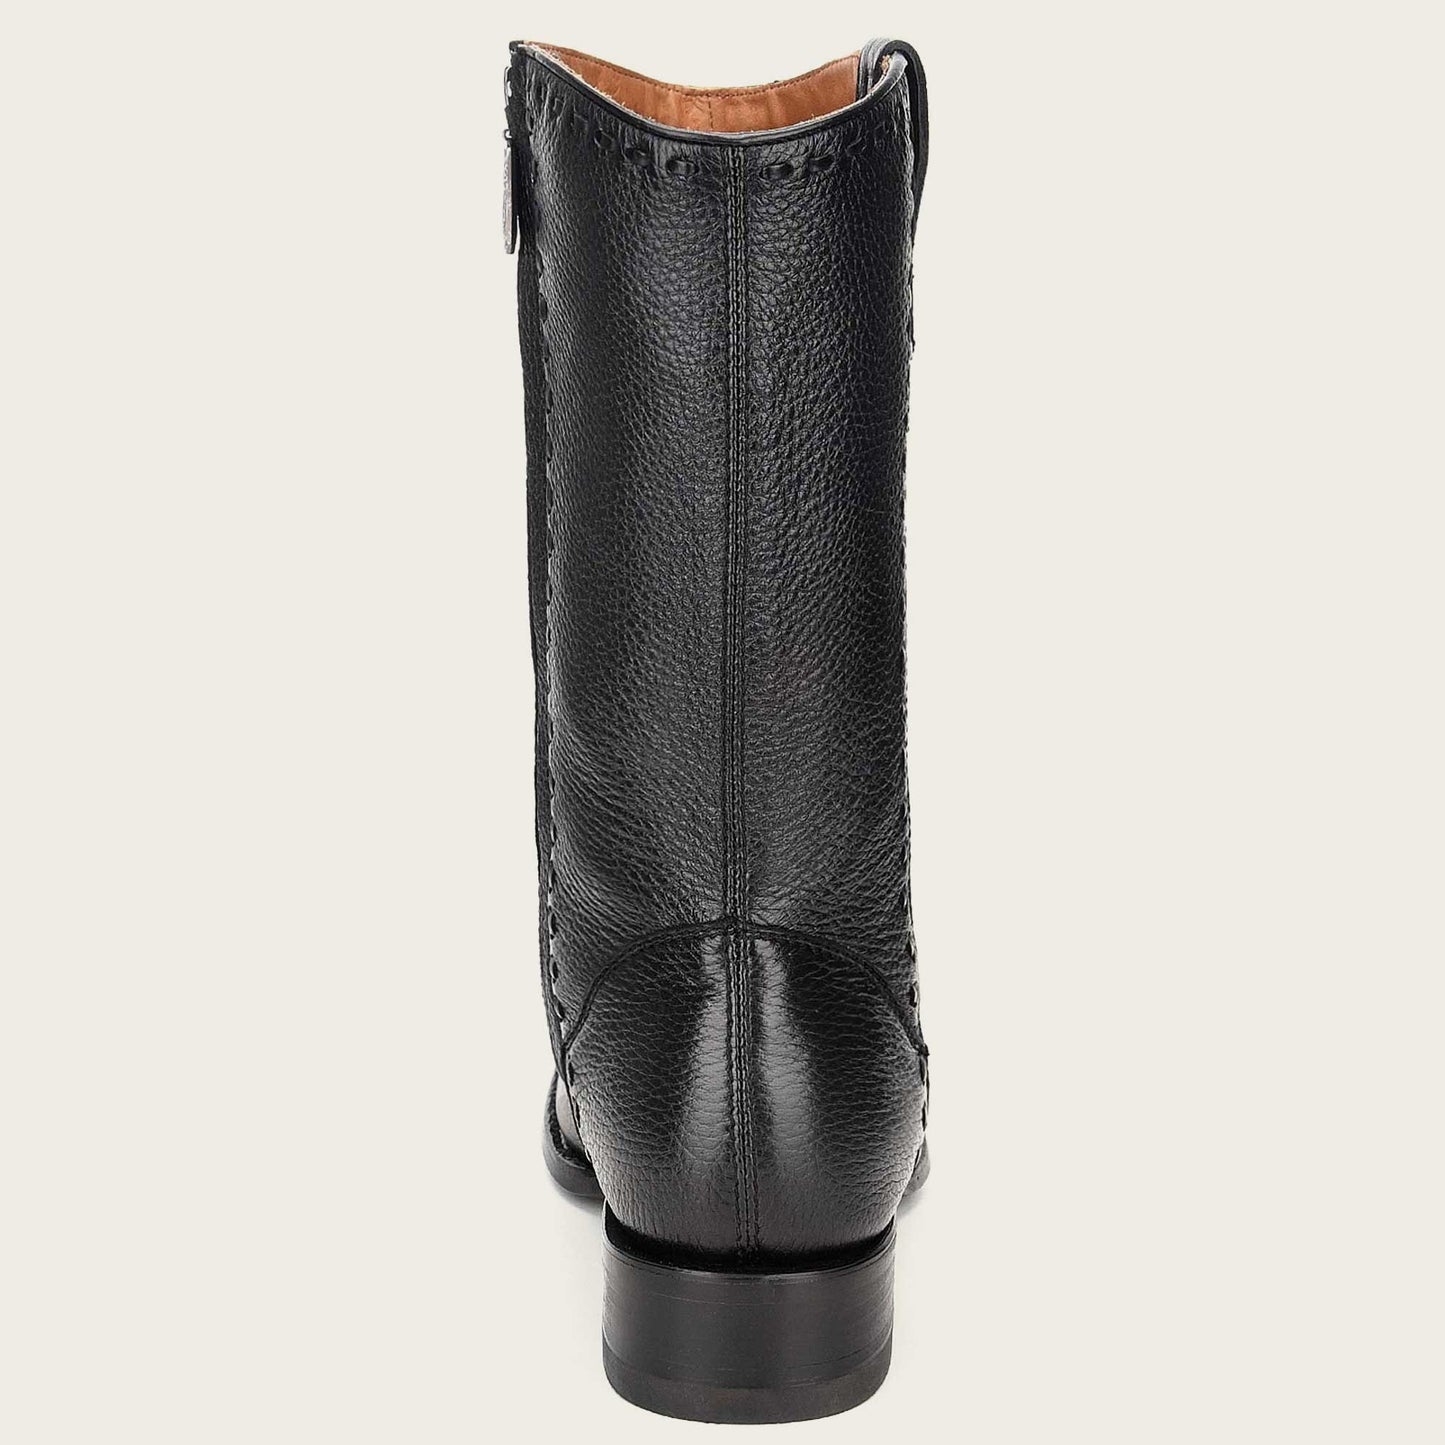 Engraved black deer leather men's dress boot with handwoven details